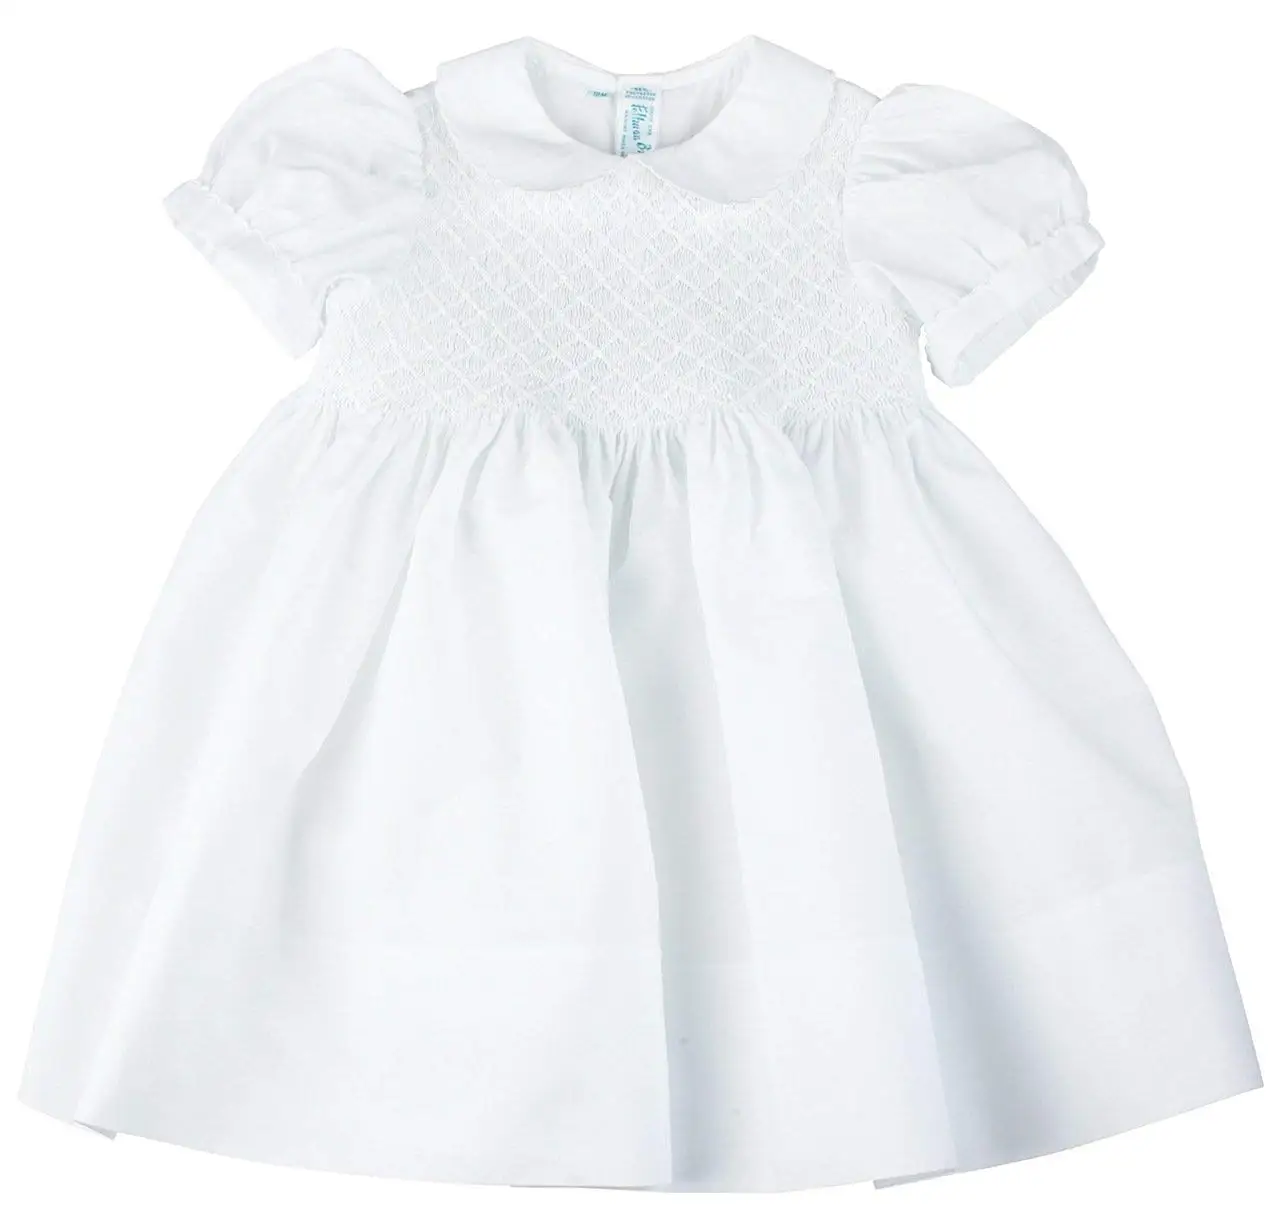 Buy Feltman Brothers Baby Girls White & Pink Smocked Dress Newborn ...